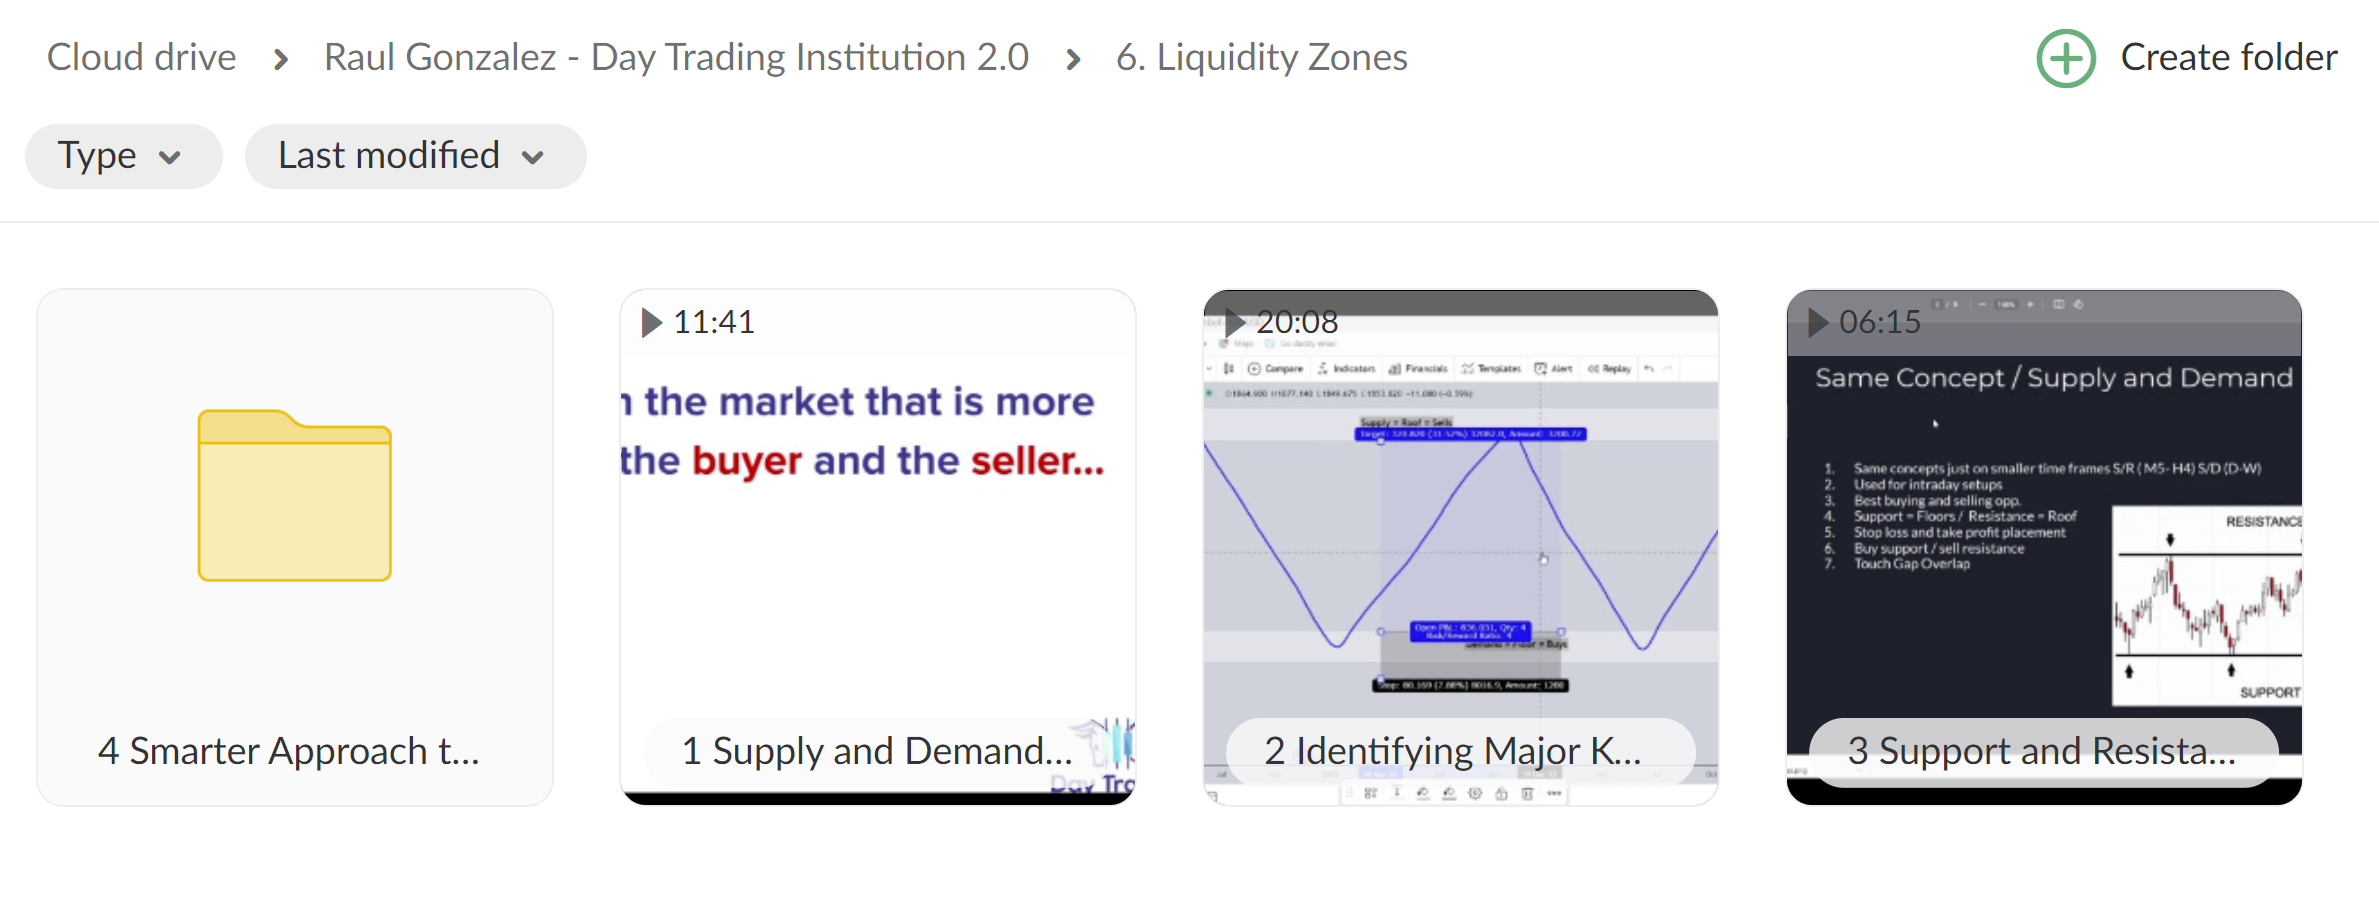 Day Trading Institution Liquidity Zones